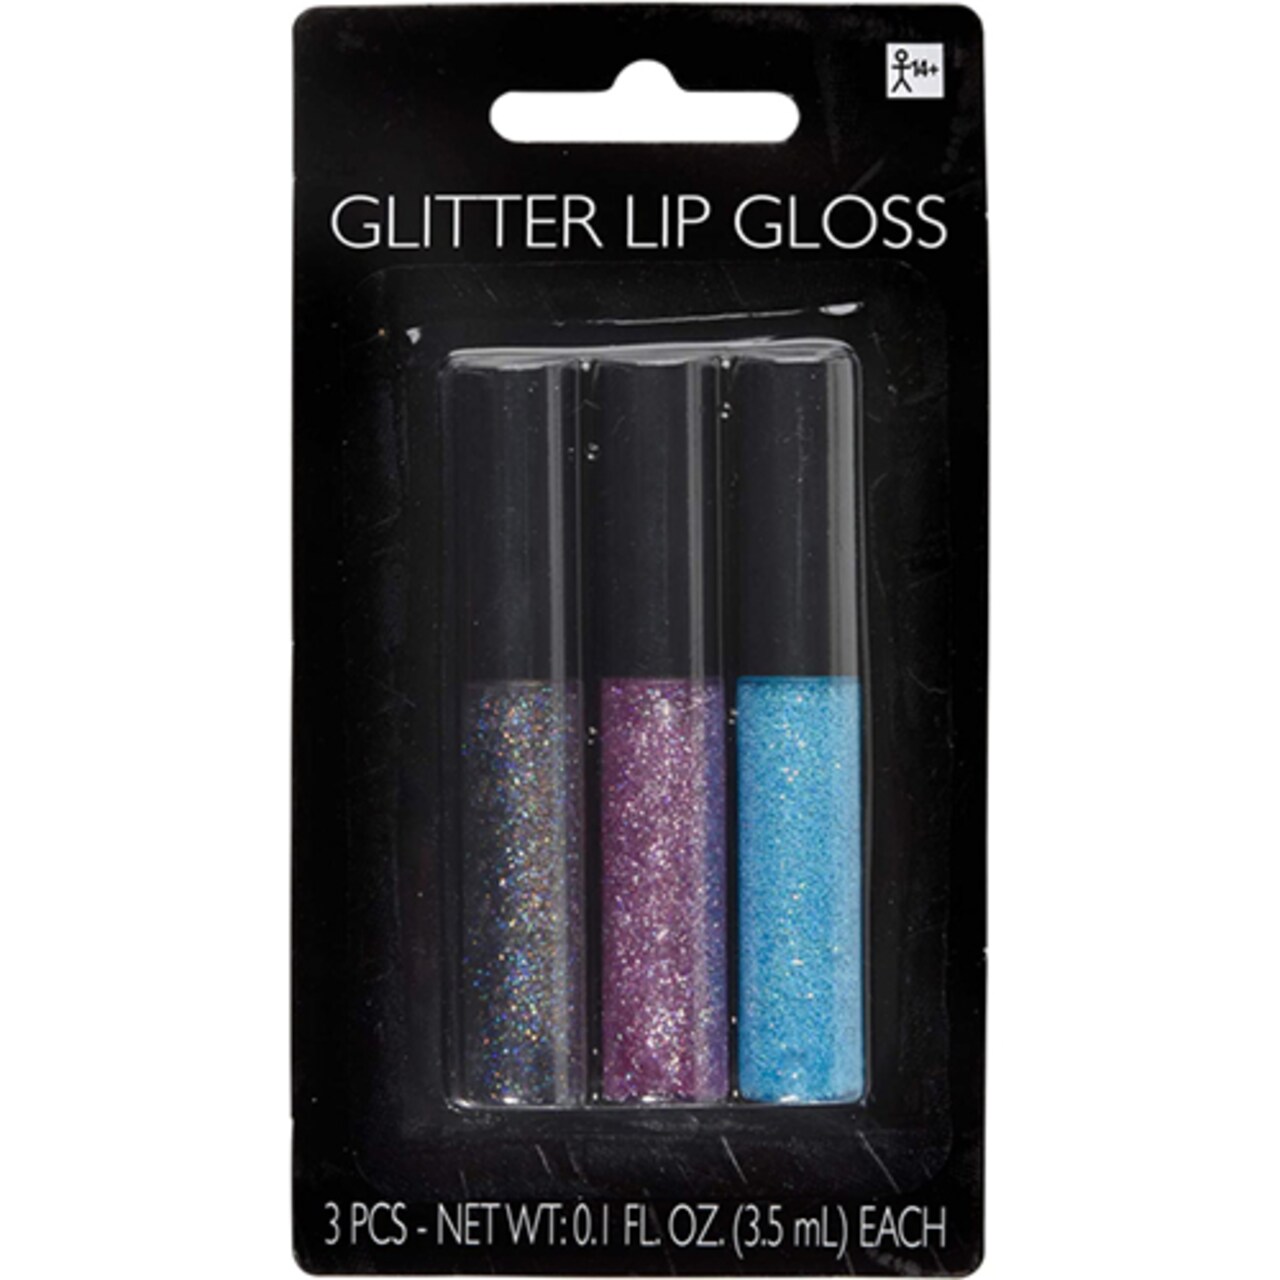 Glitter Lip Gloss Kit